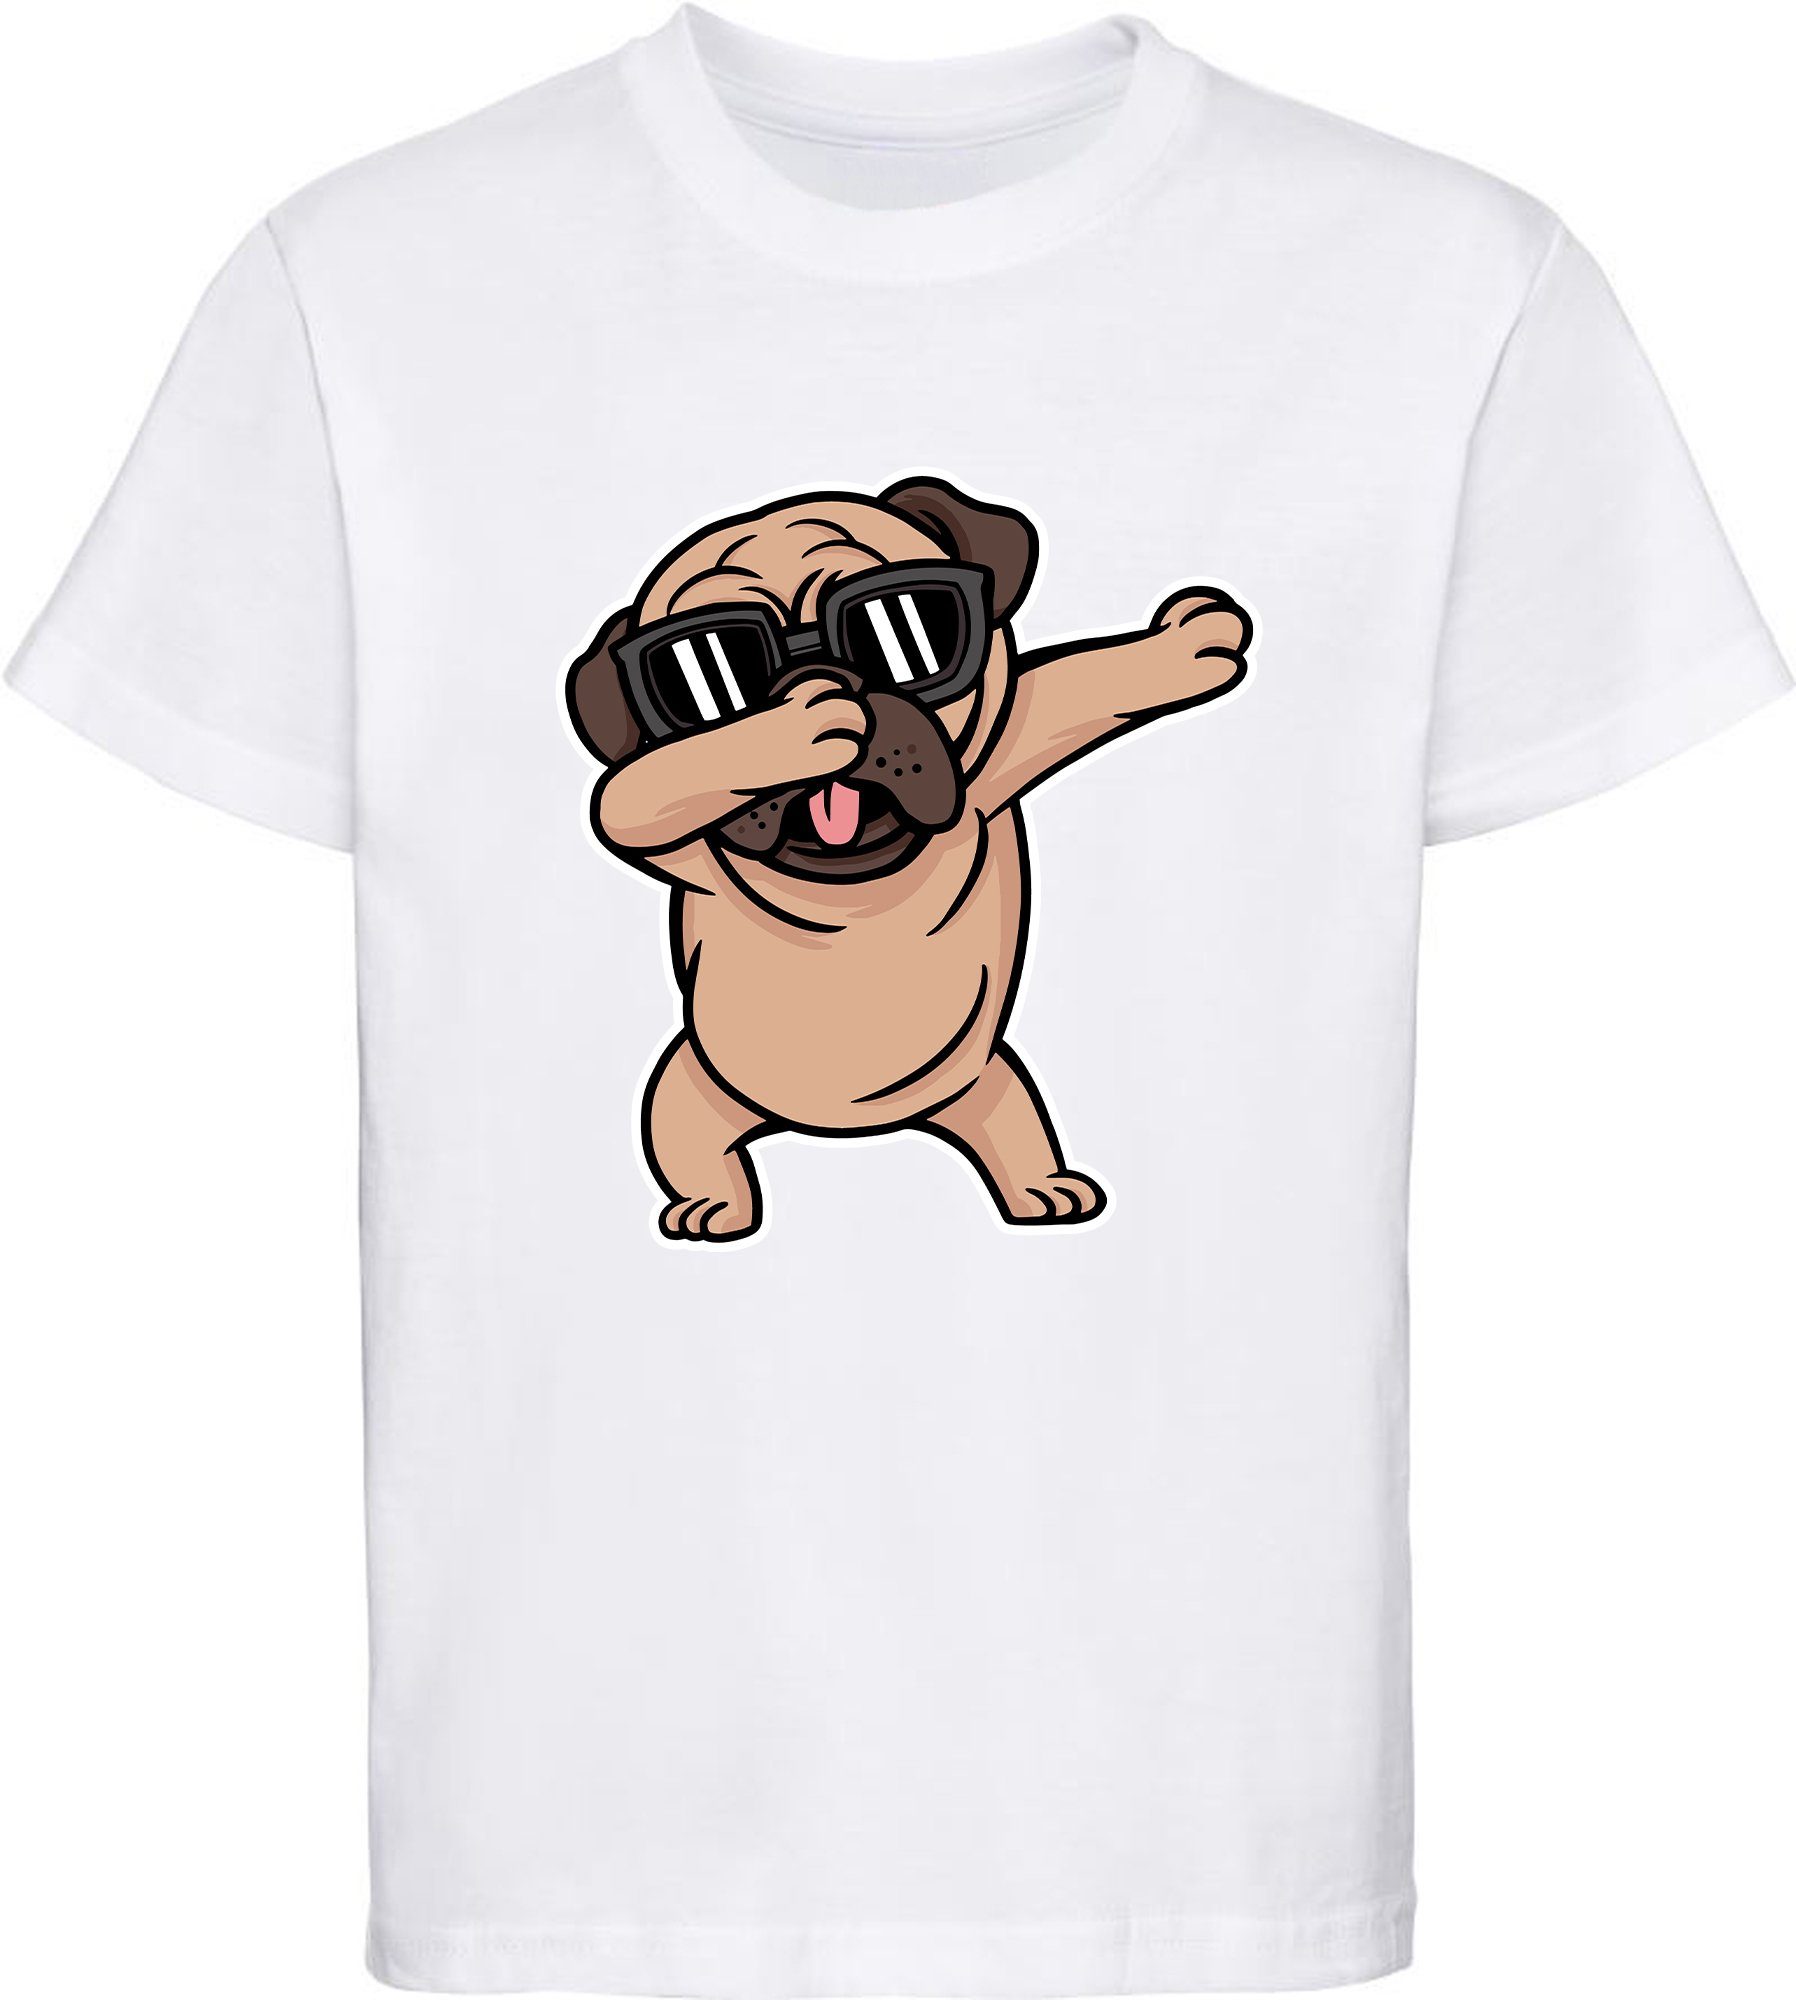 Cooler weiss mit T-Shirt mit Hunde Print-Shirt Hund - Baumwollshirt Aufdruck, bedruckt MyDesign24 Kinder i239 Skateboard